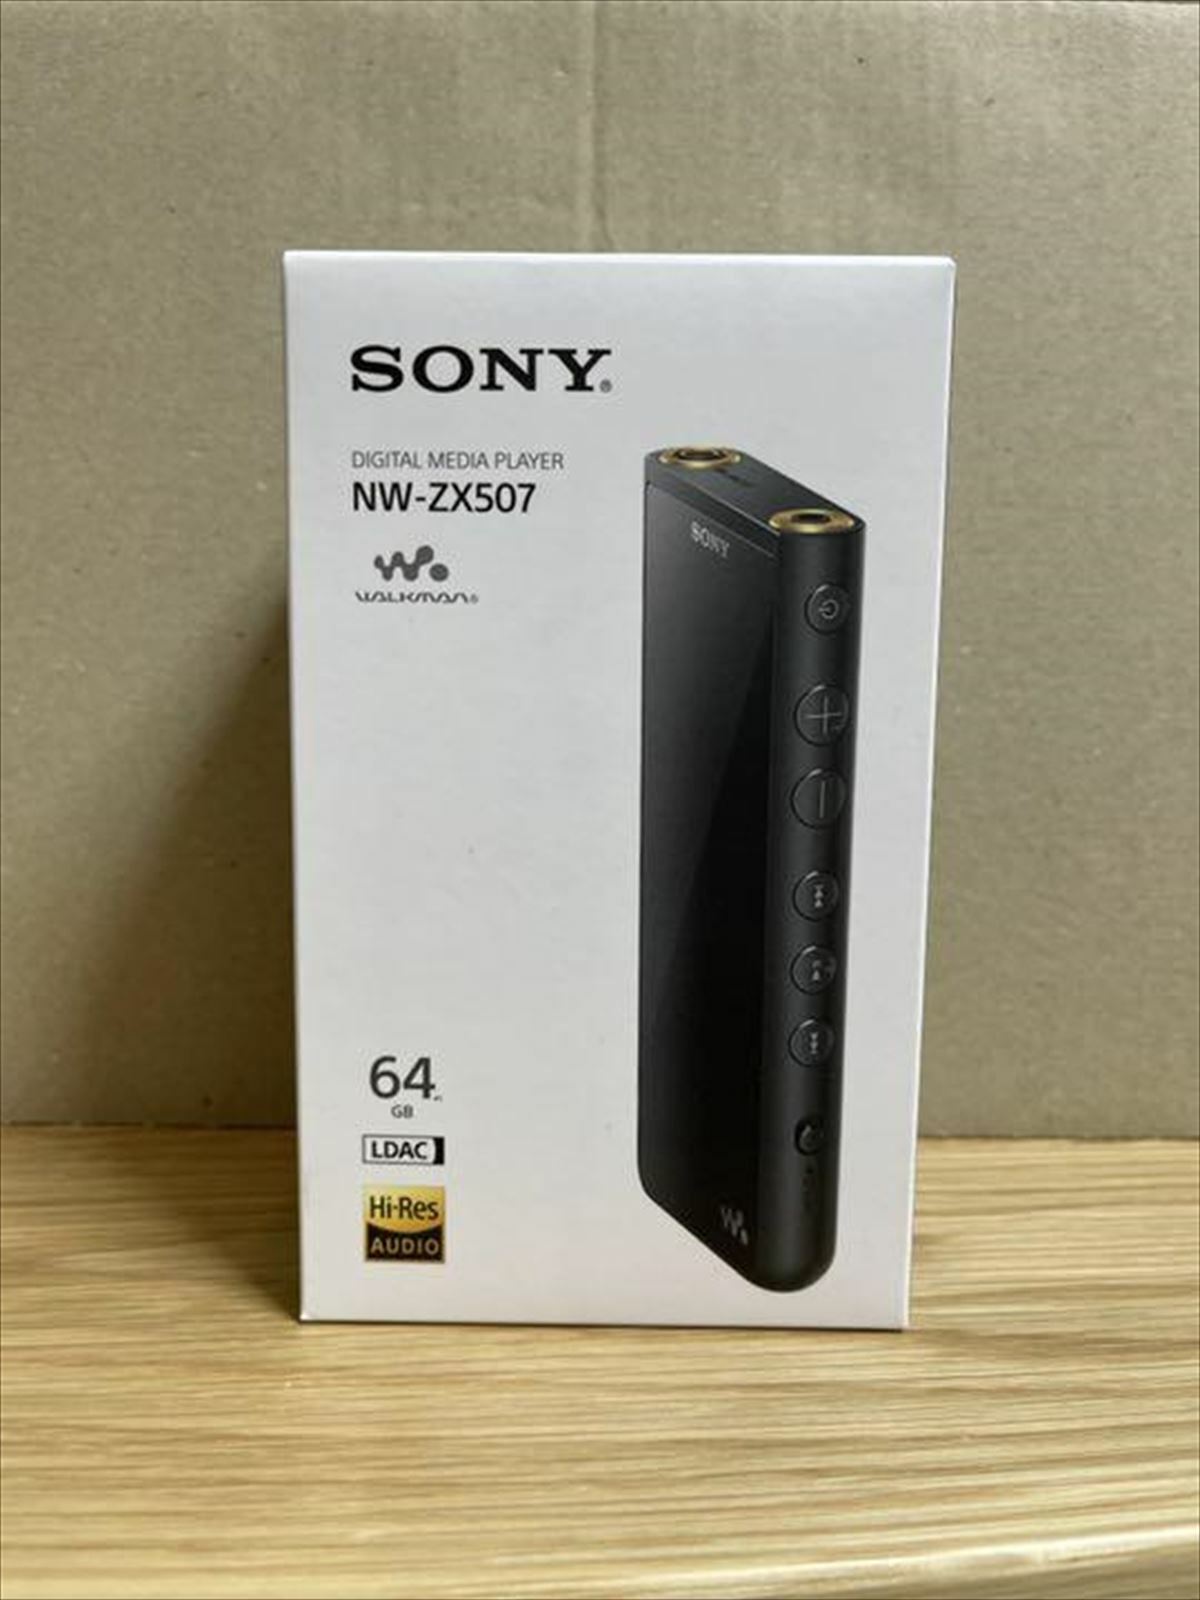 Sony Walkman ZX500 Black Portable MP3 Player - NWZX507B for sale 